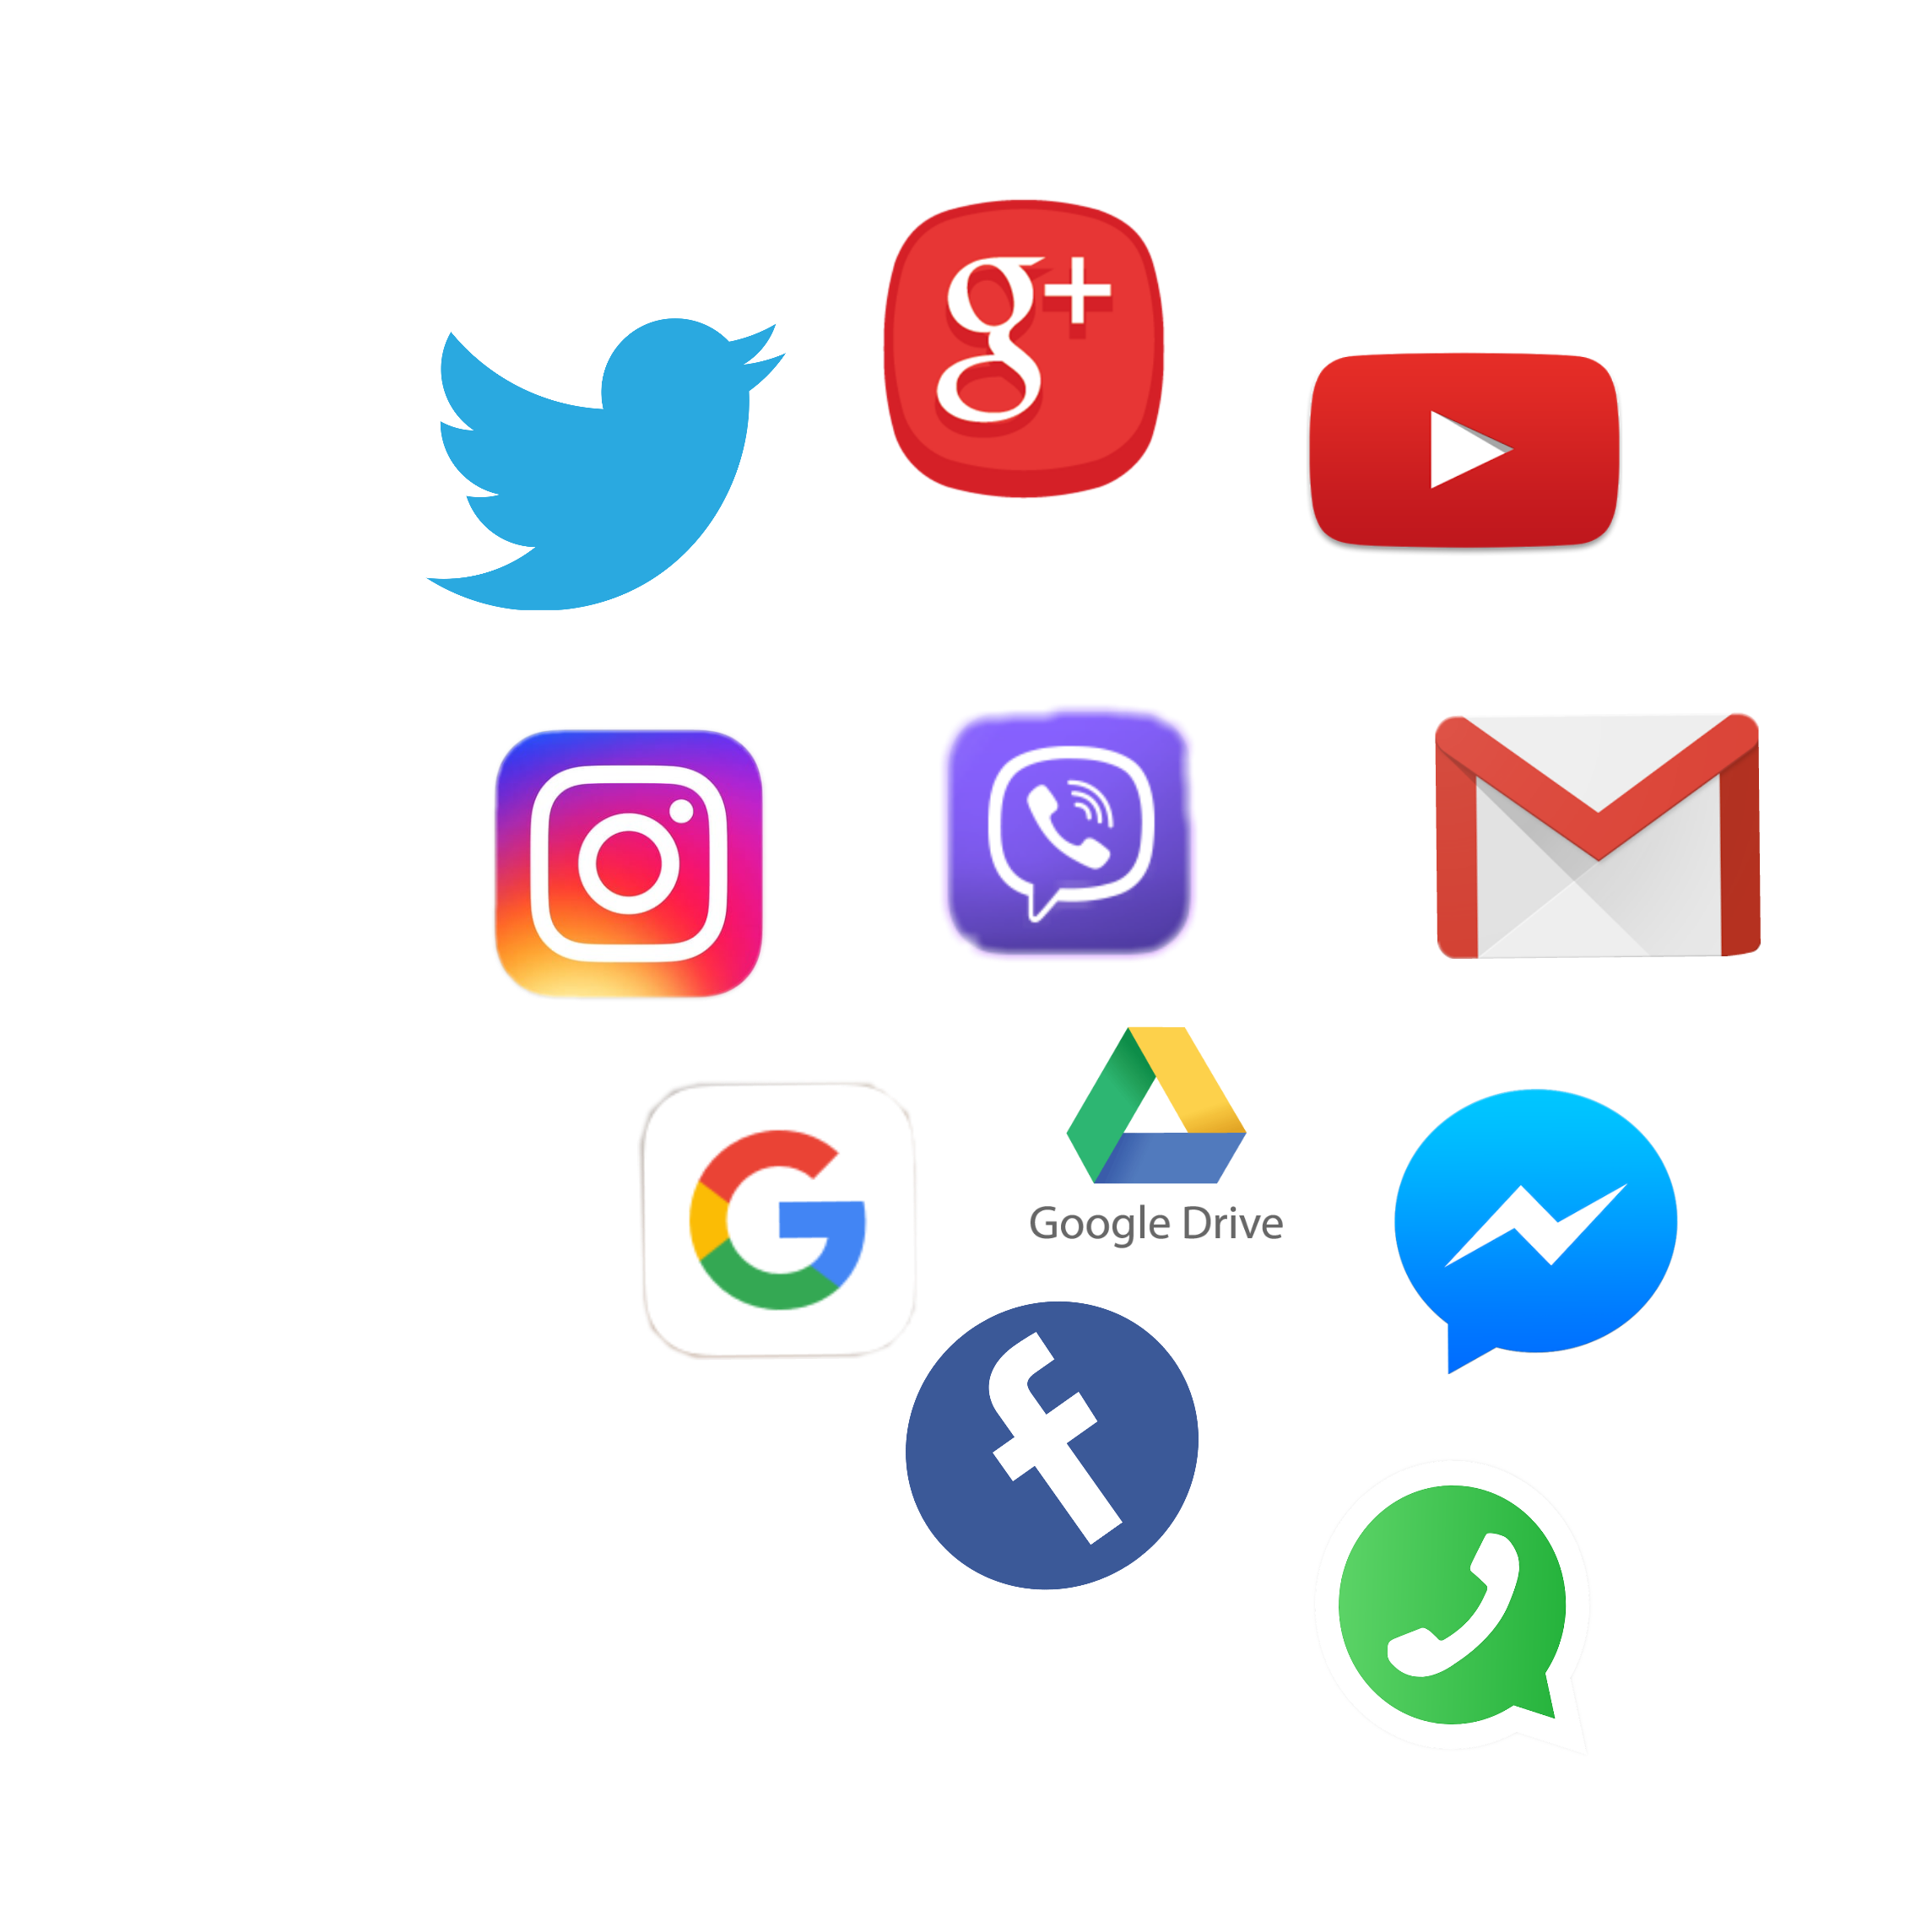 freetoedit#facebook #messenger #google #whatsapp #yahoo #gmail #y. Background image wallpaper, Background wallpaper for photohop, Blur background in photohop